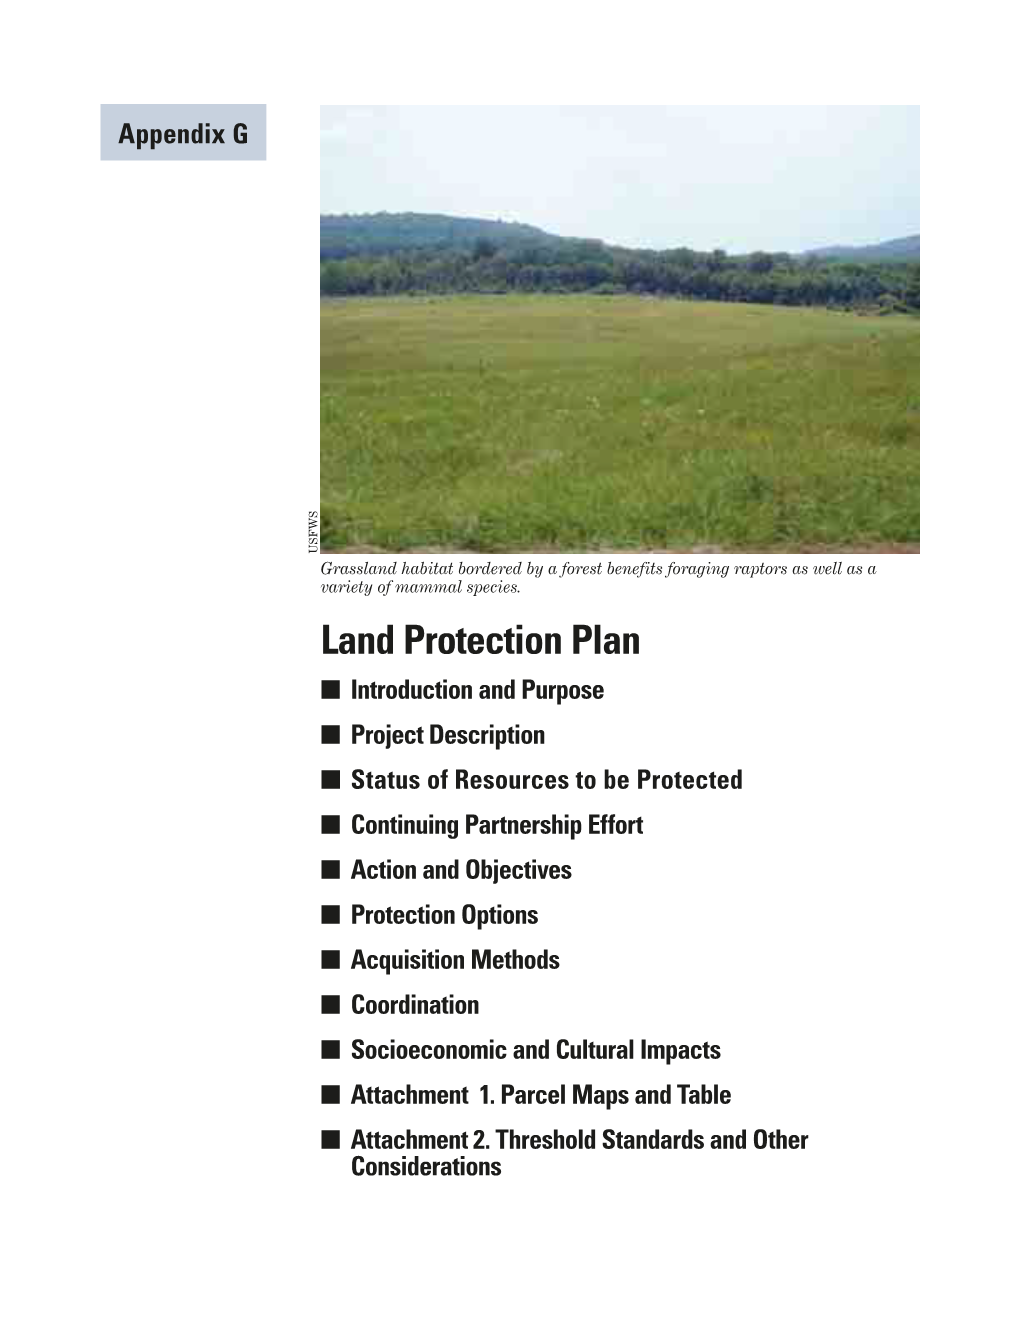 Appendix G-Land Protection Plan